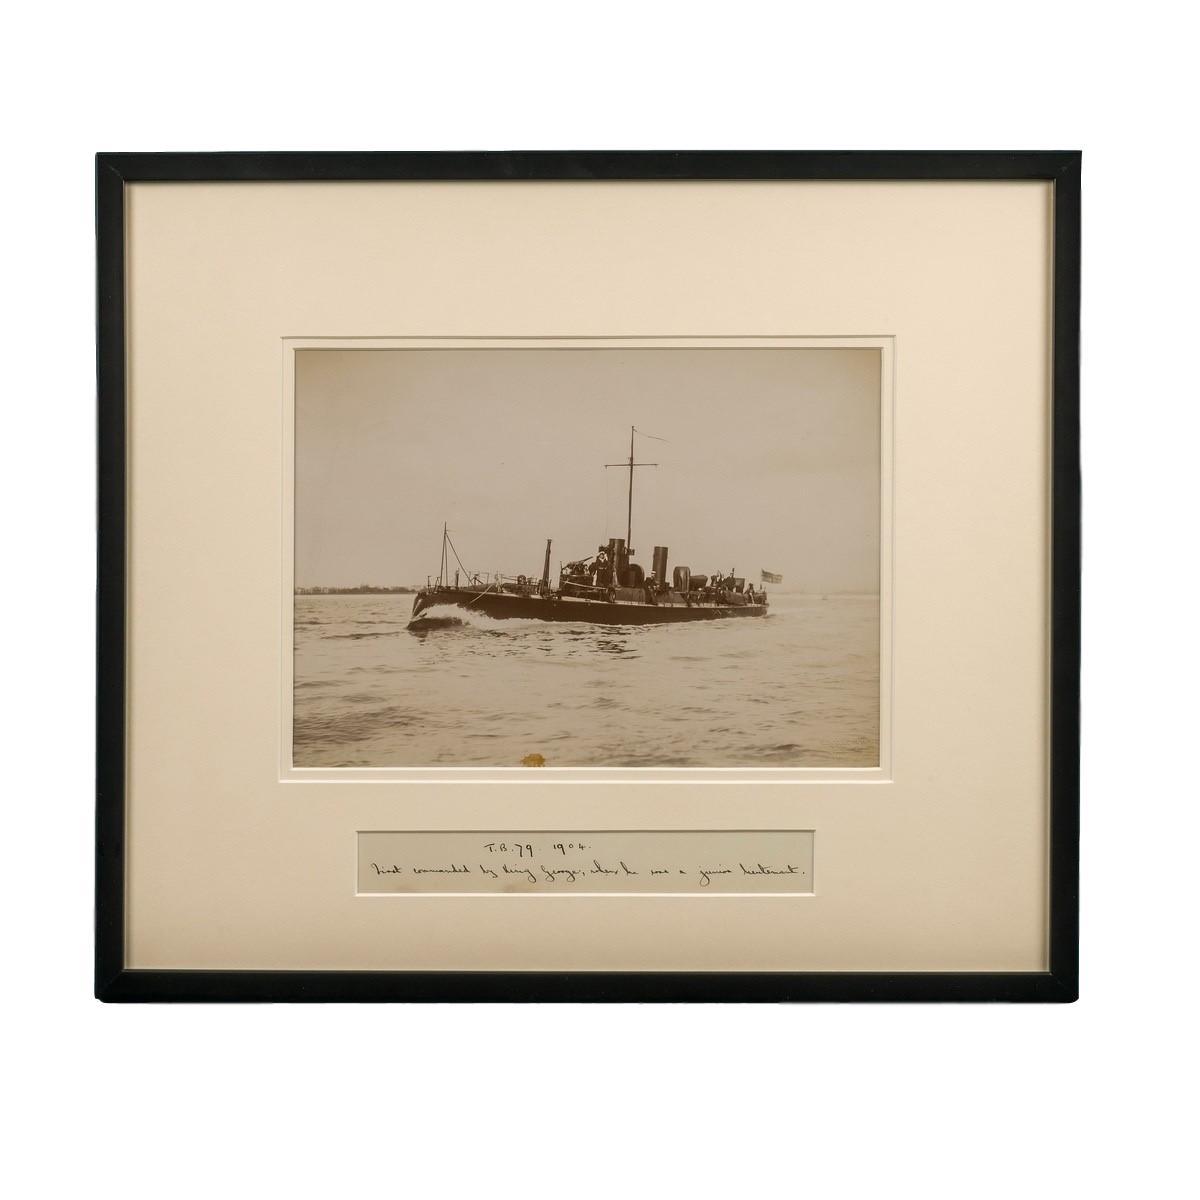 Framed albumen photograph of the Royal Navy Torpedo boat No 79